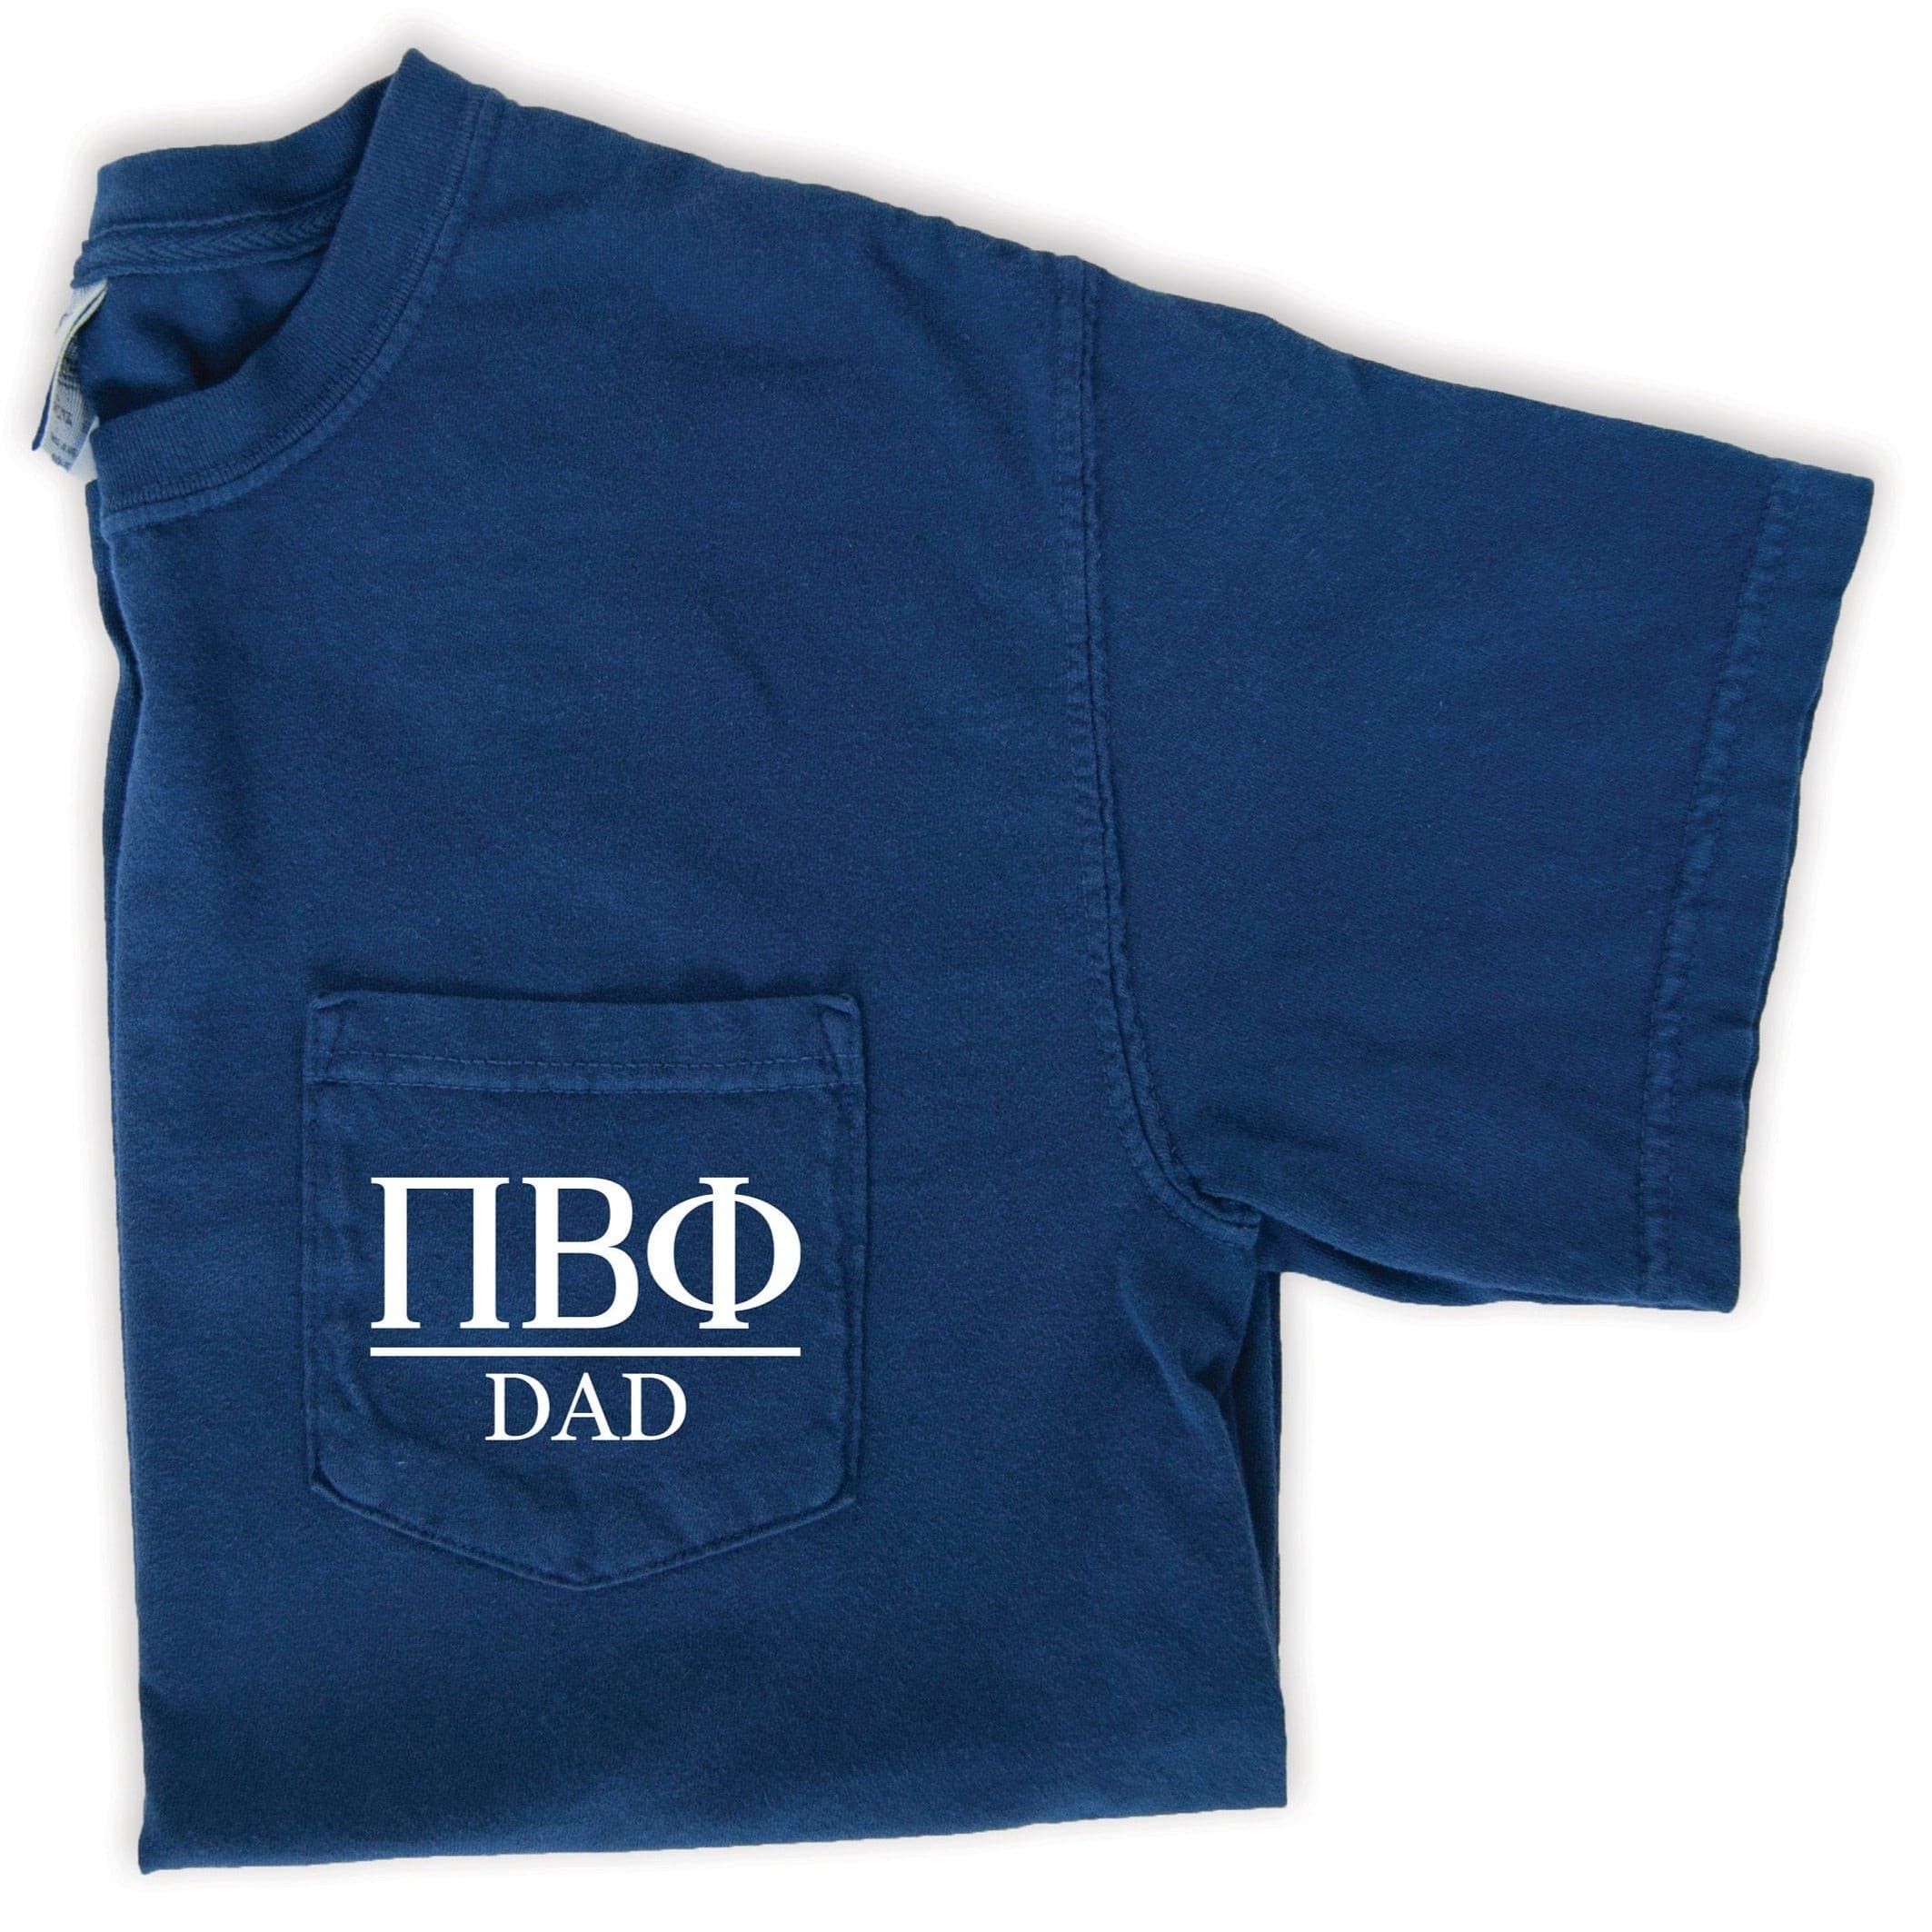 Pi Beta Phi Dad T-Shirt - Navy - Go Greek Chic